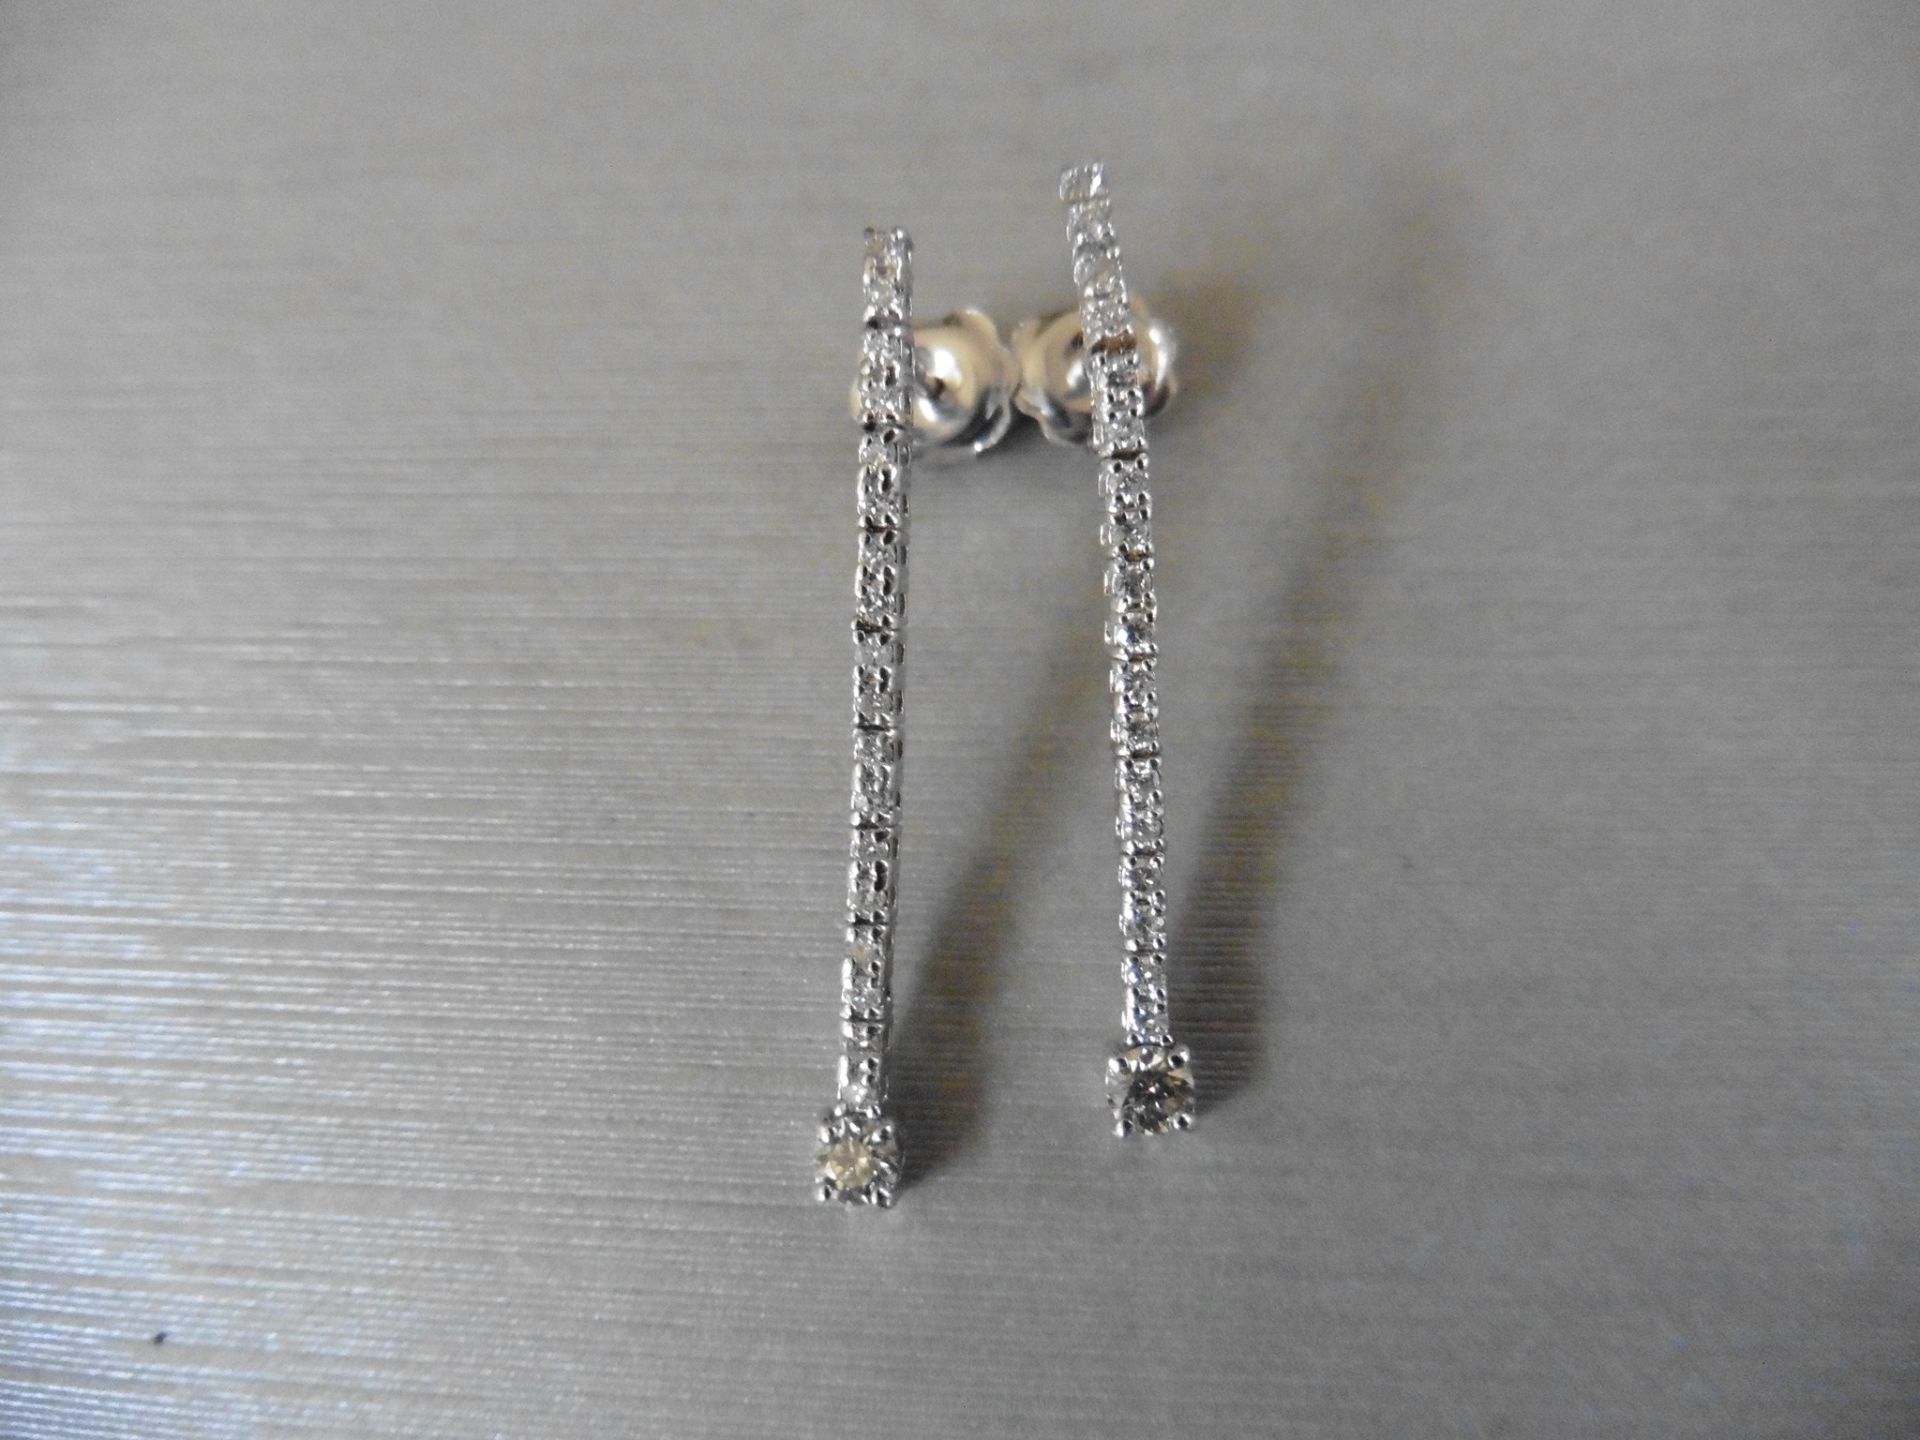 0.60ct 18ct white gold diamond drop earrings set with brilliant cut diamonds. I colour, si2 clarity.